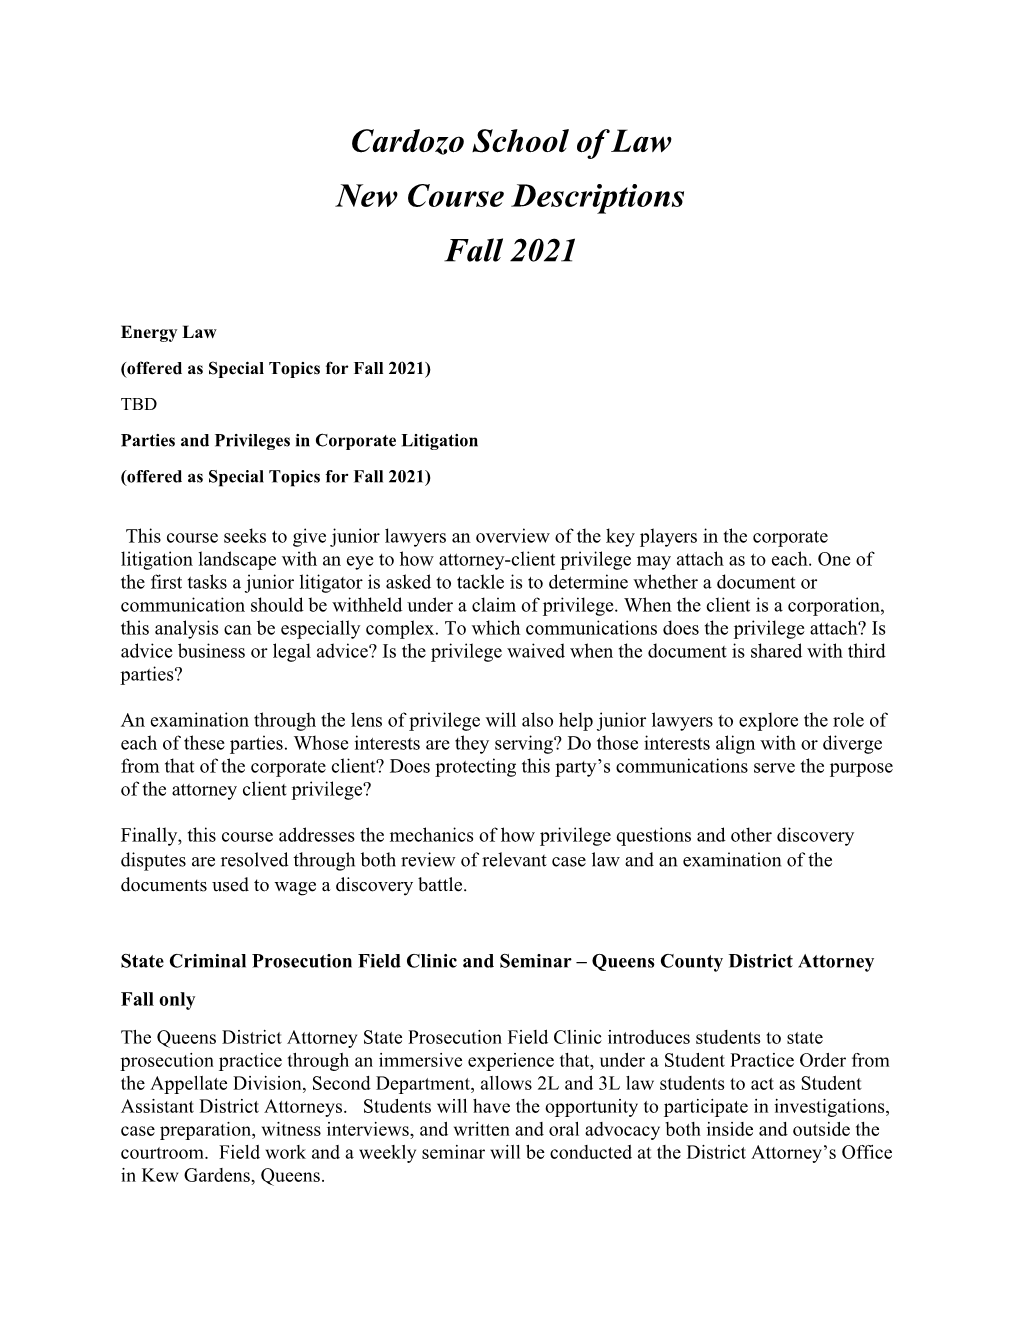 Cardozo School of Law New Course Descriptions Fall 2021